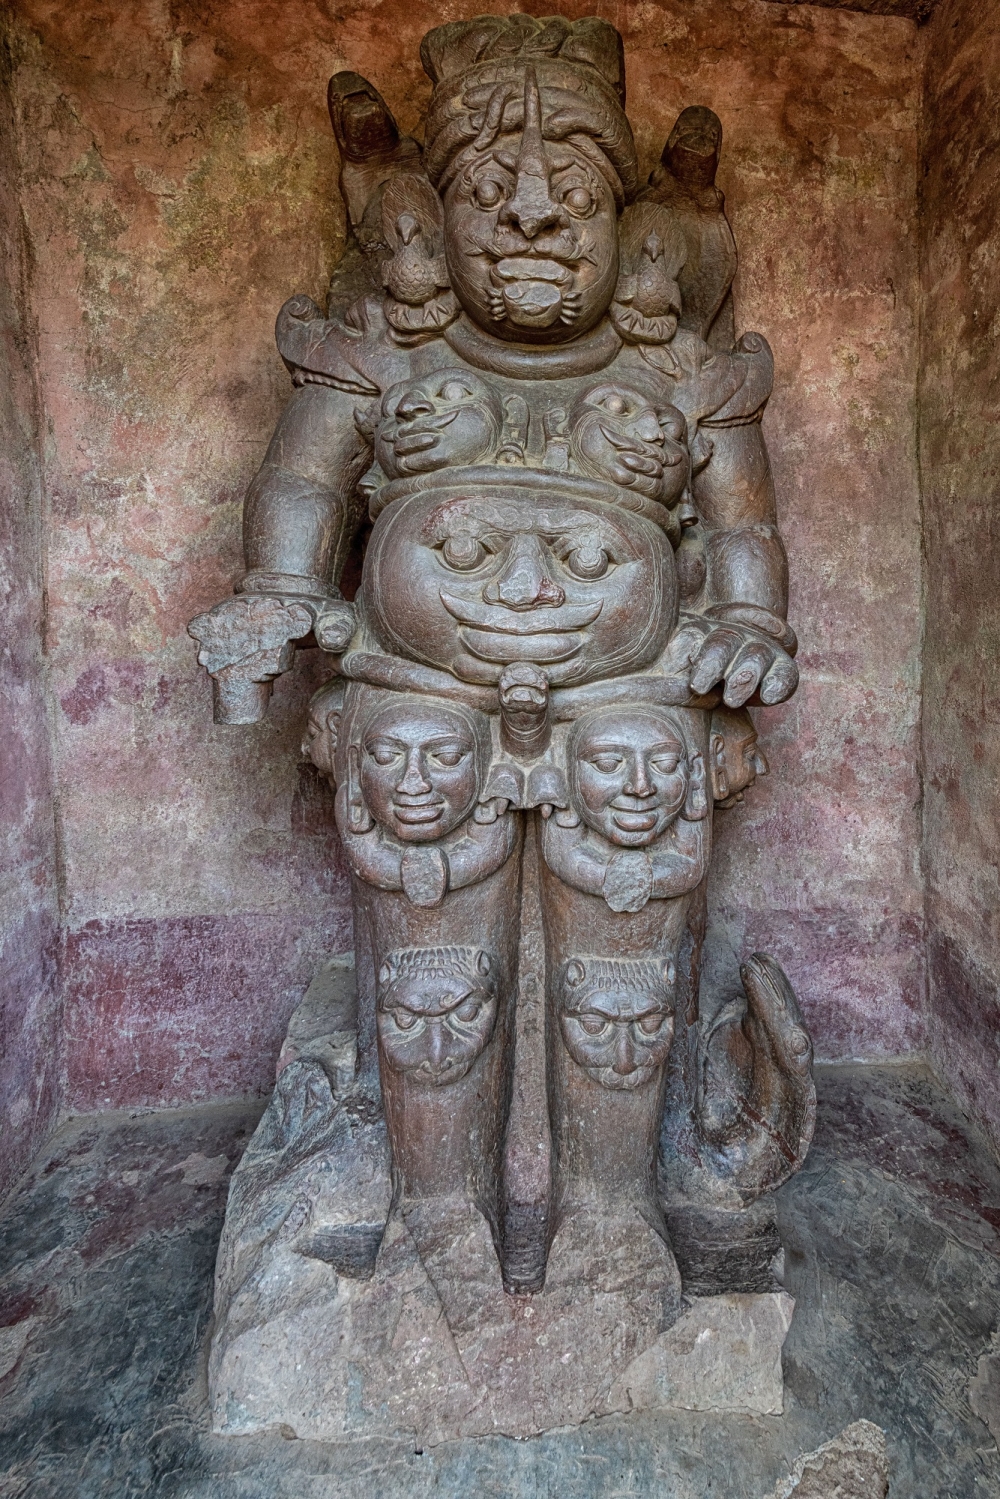 The popular Tala sculpture